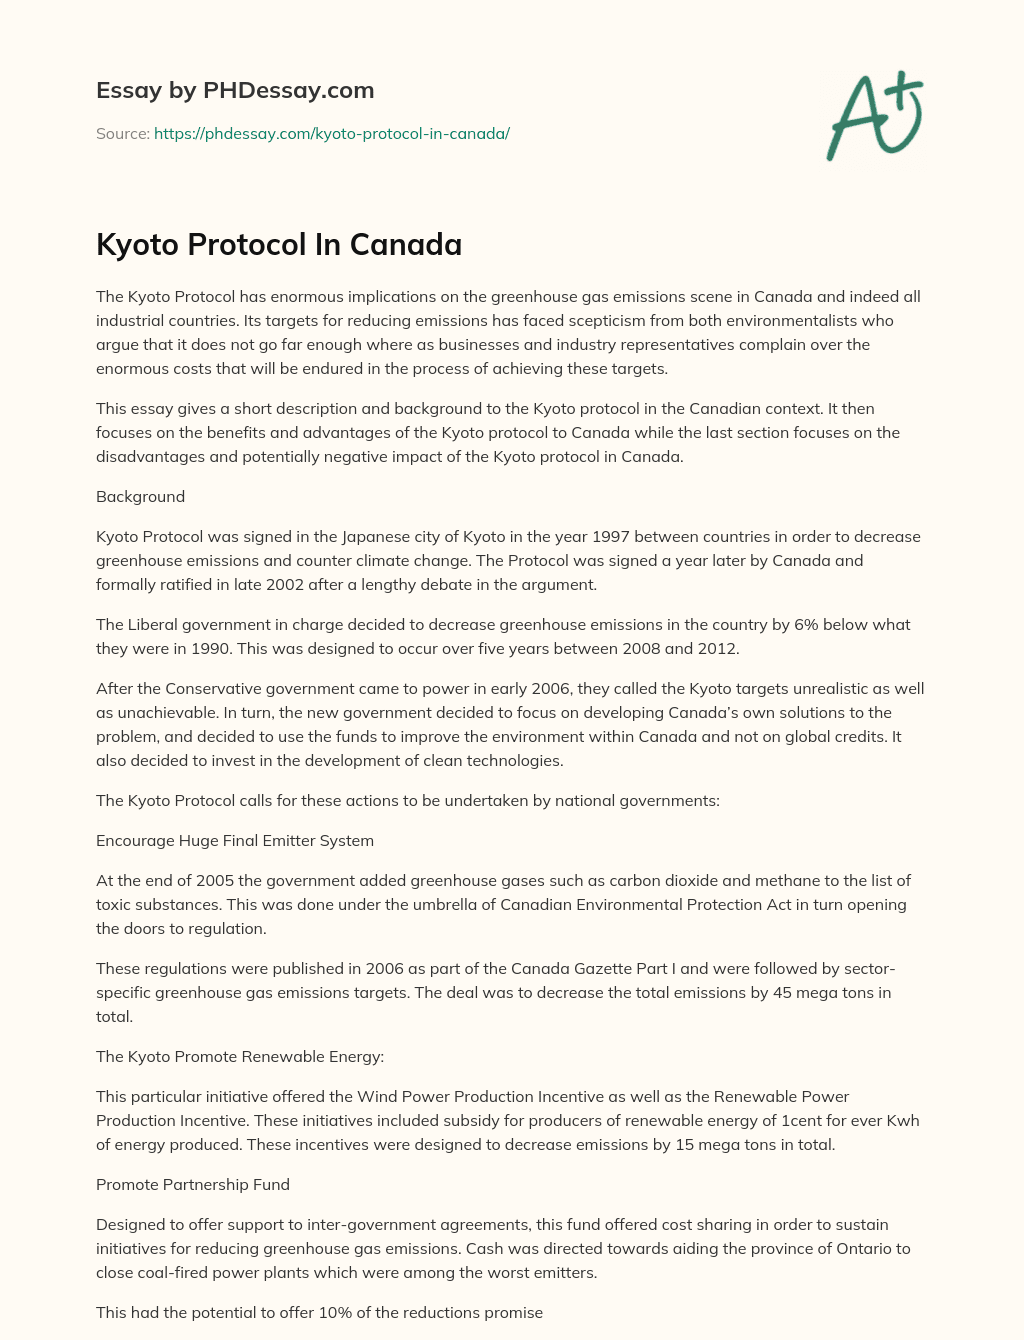 Kyoto Protocol In Canada essay